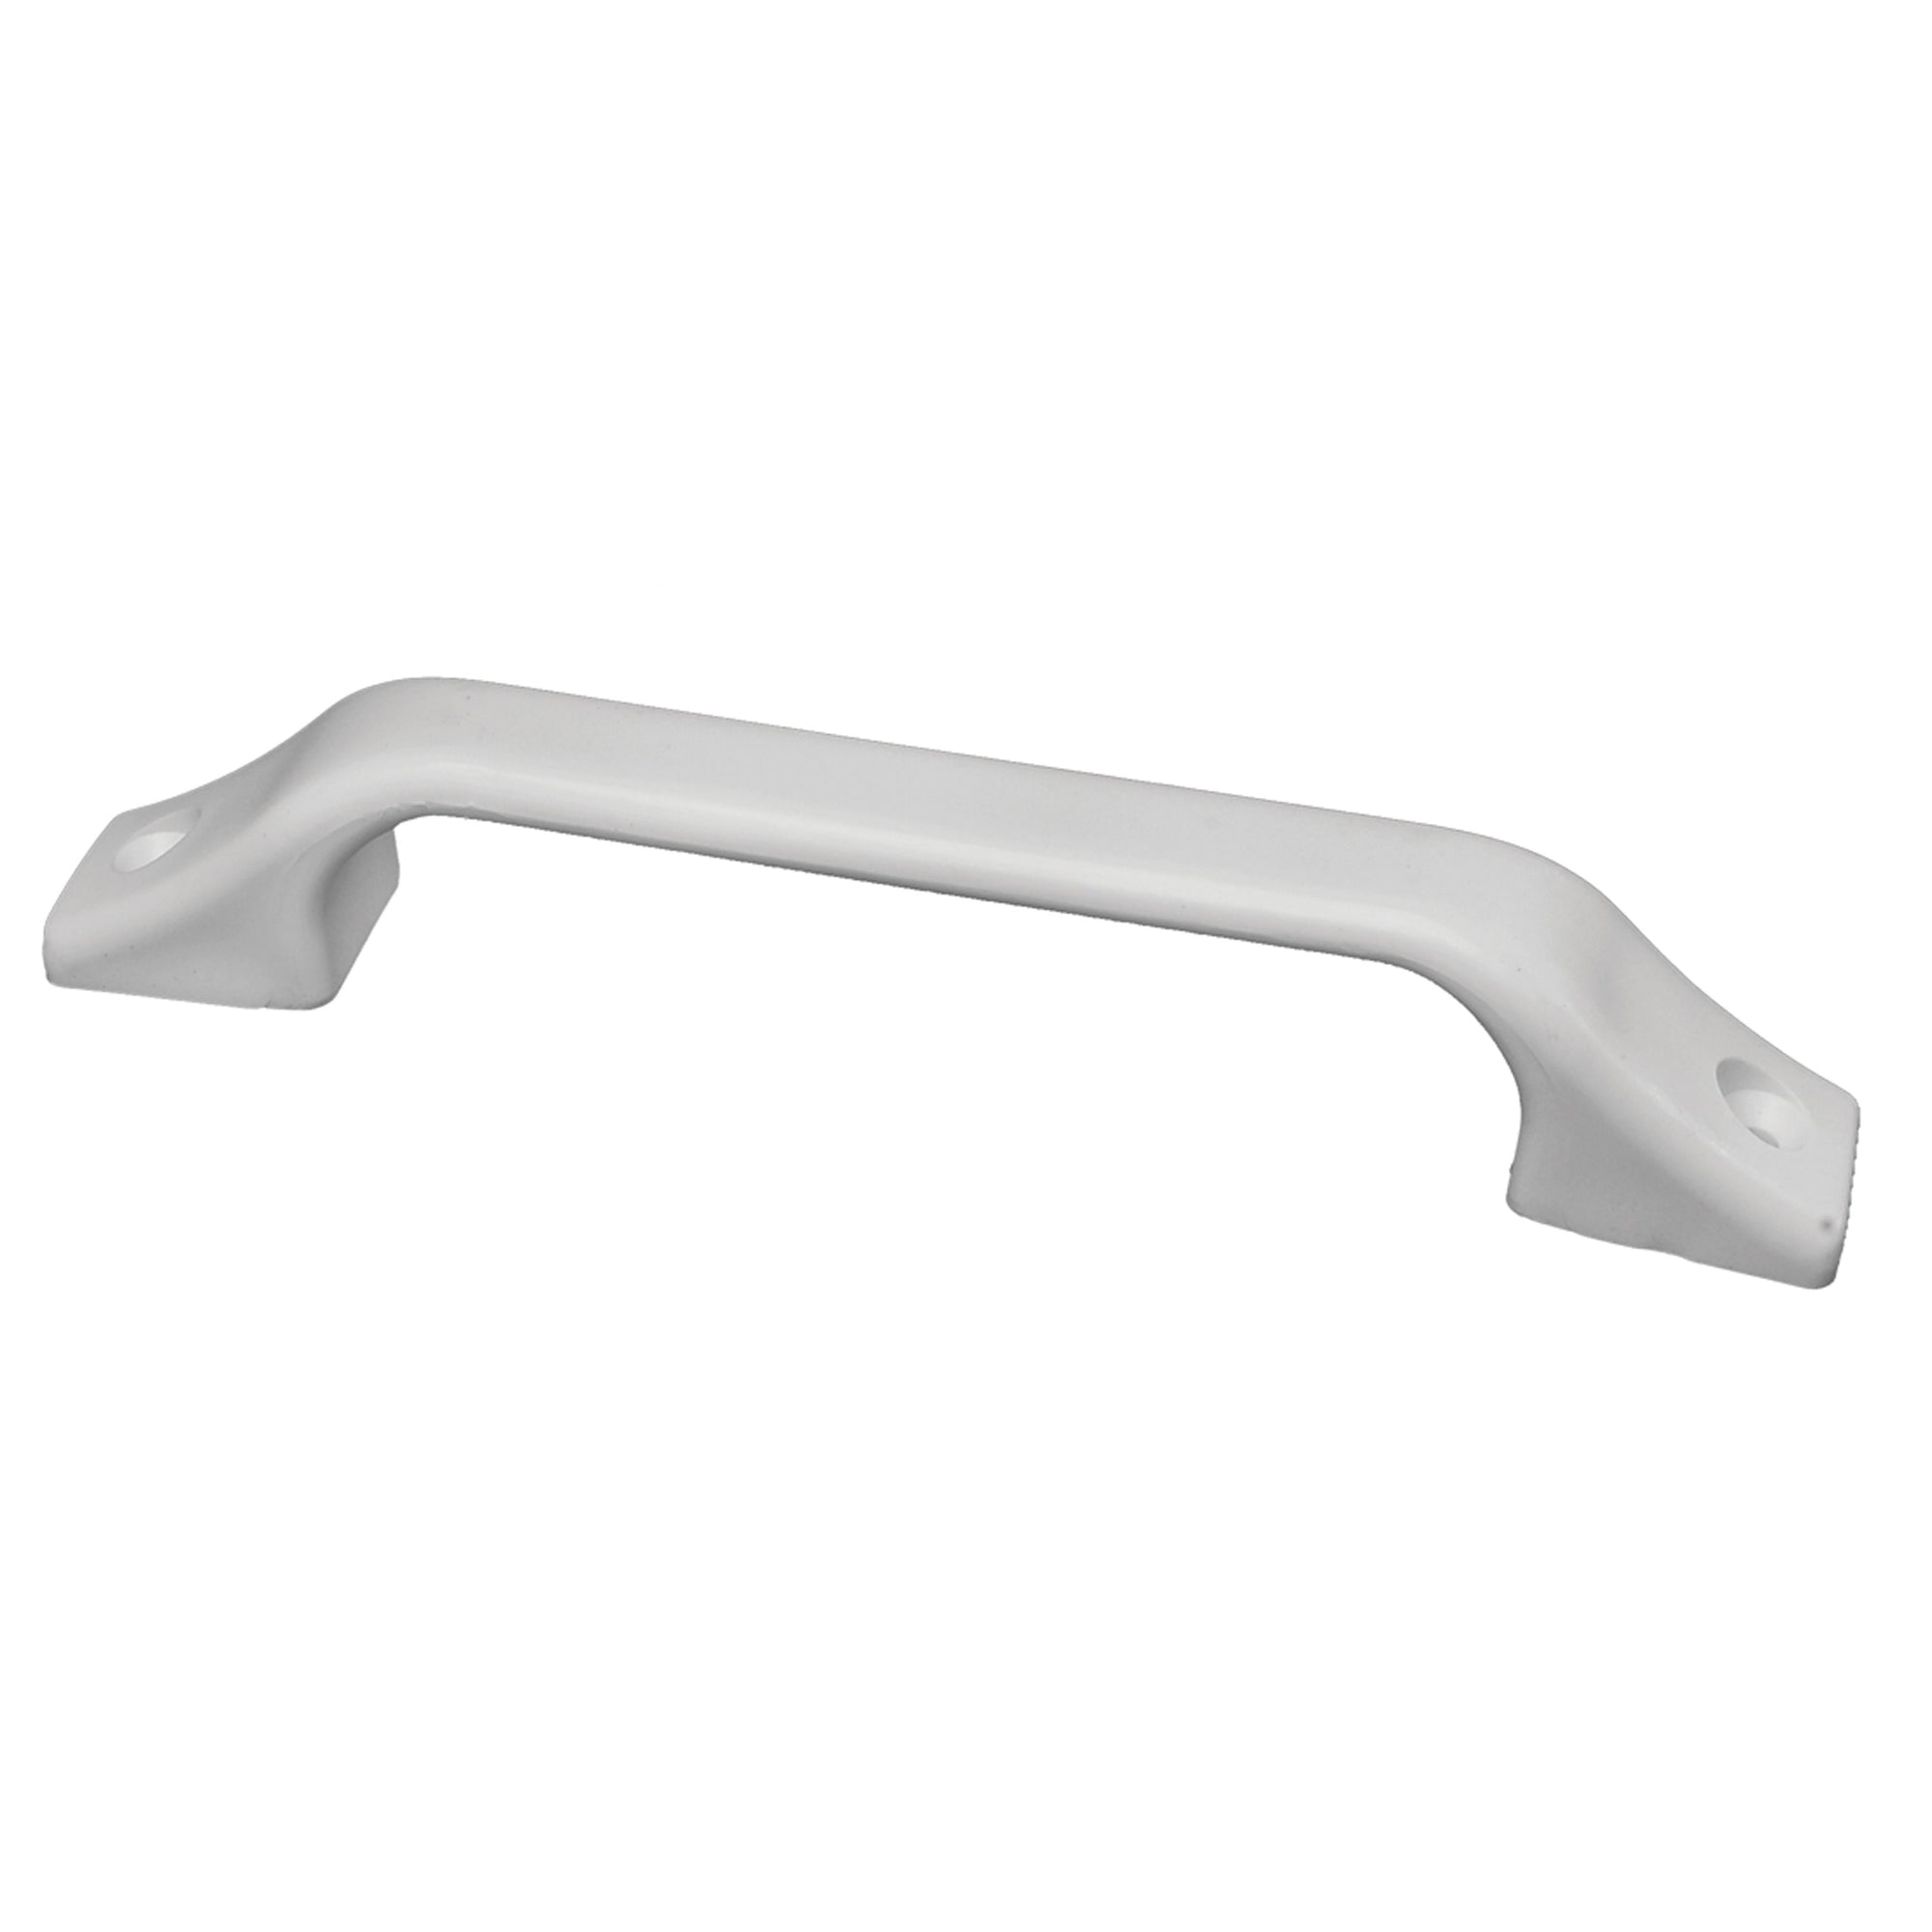 RV Designer E222 Grab Handle - White Plastic, 9-1/2"